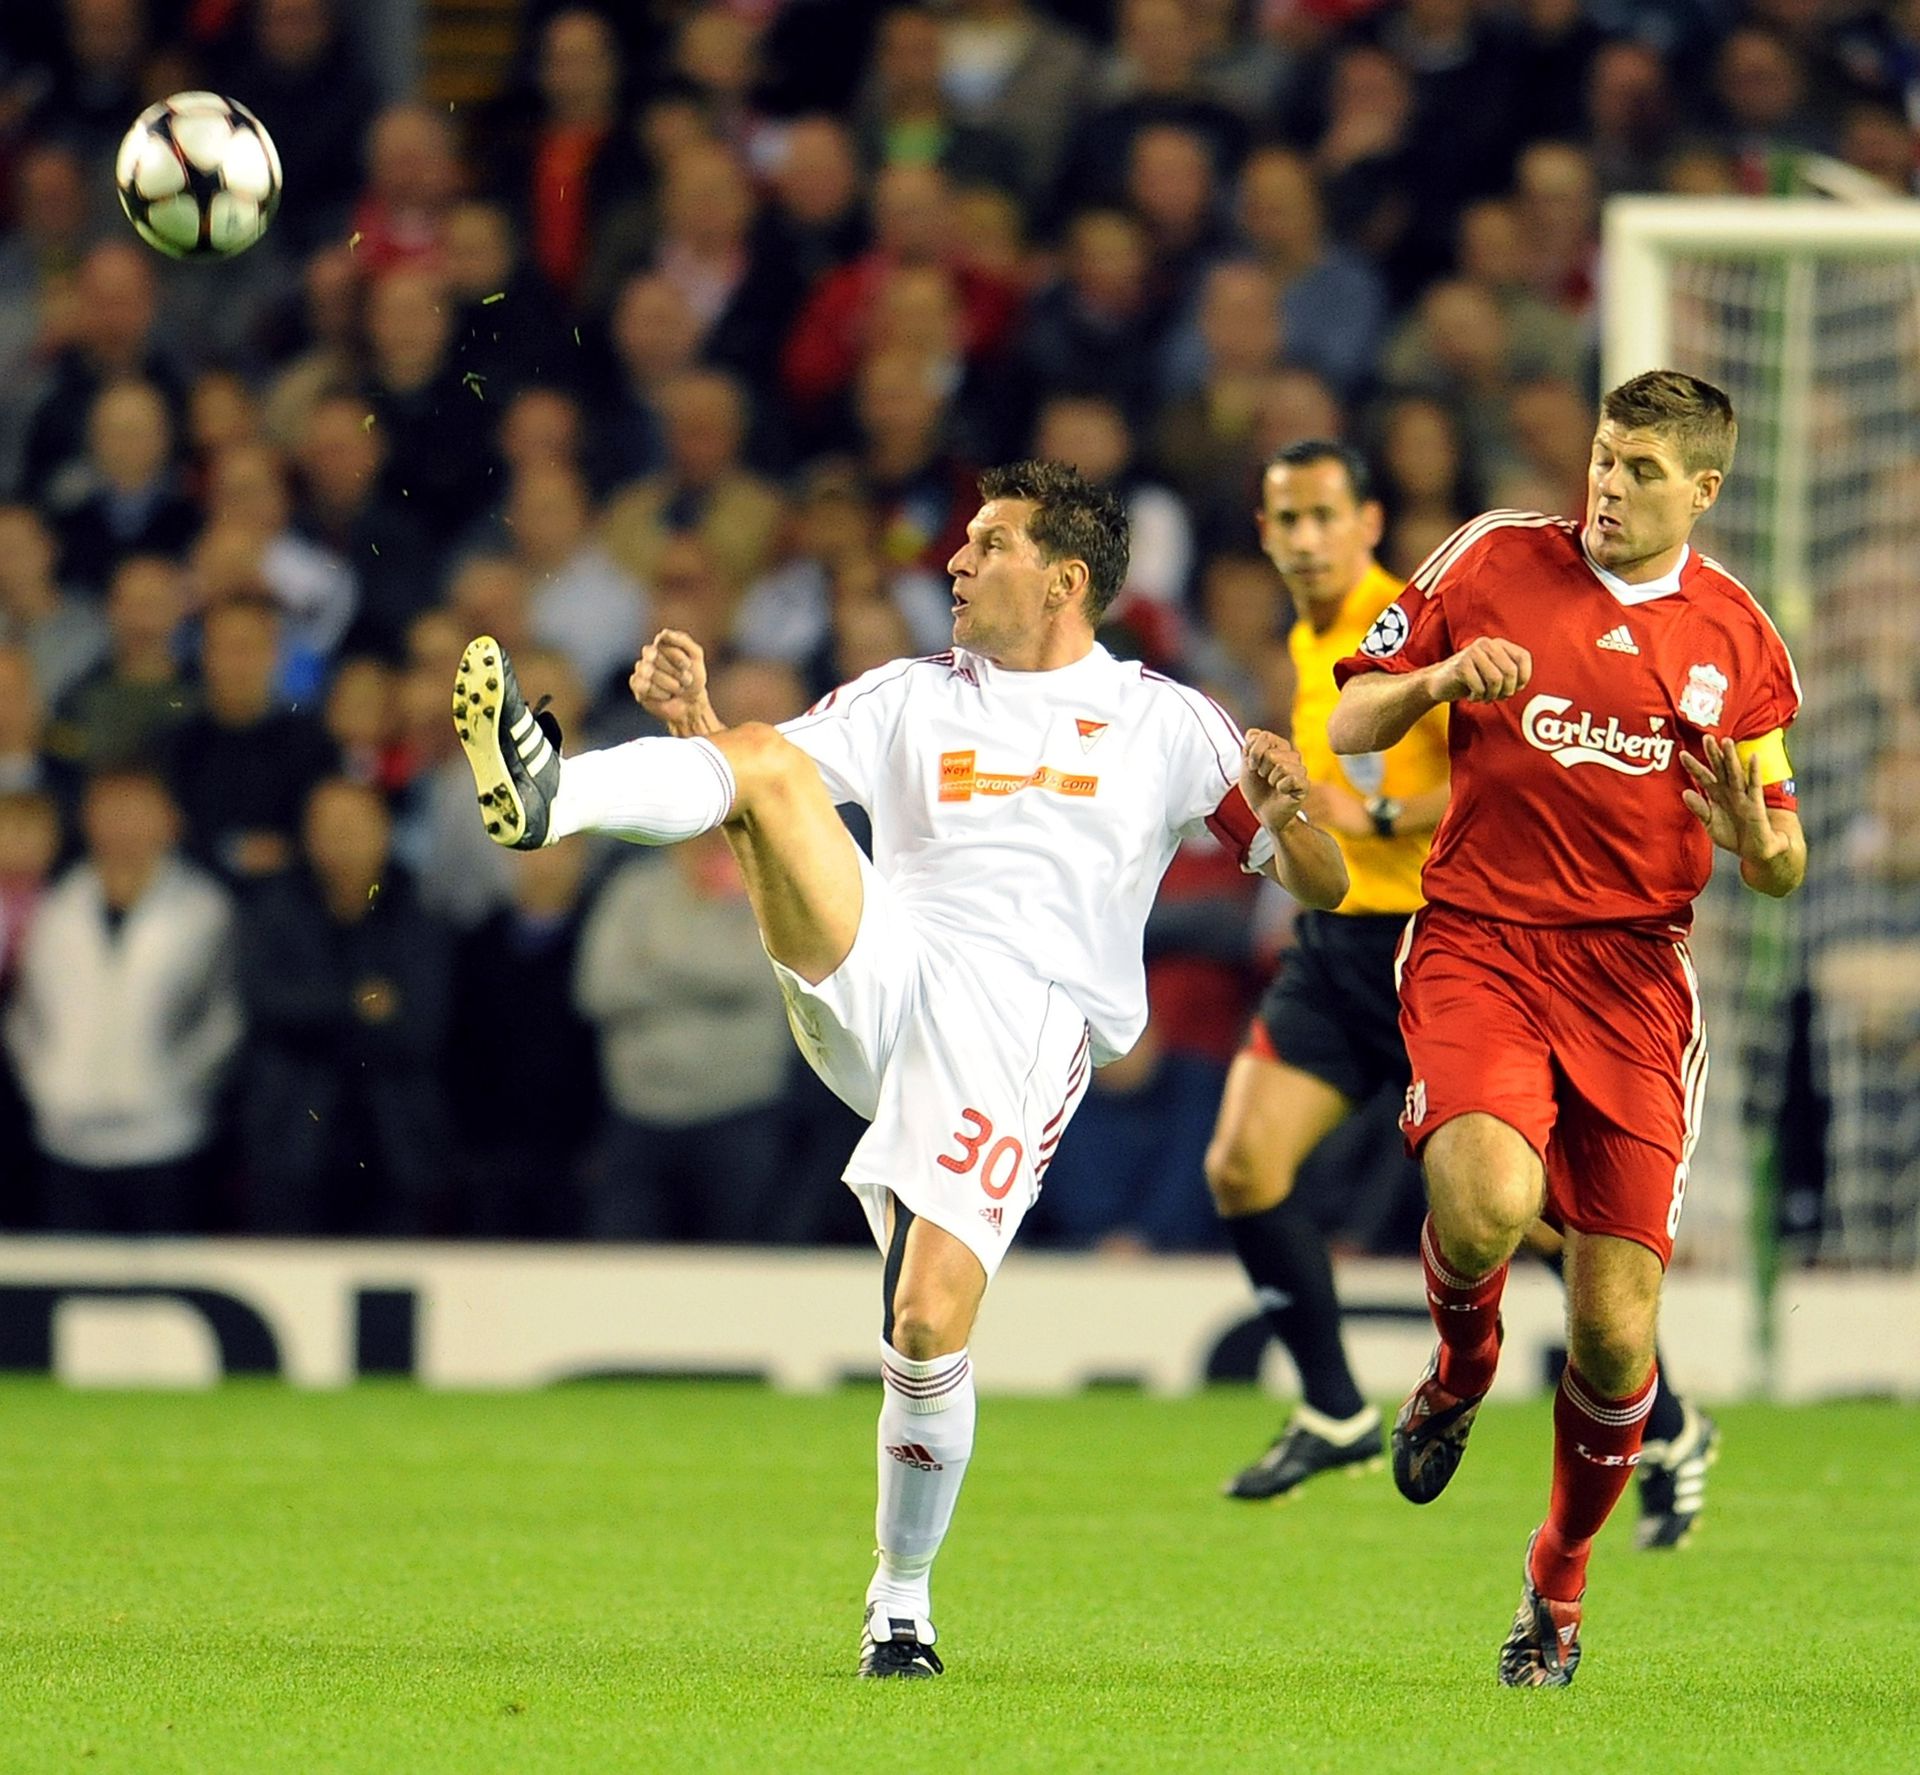 Steven Gerrard ellen is csatázott az Anfielden /Fotó: Getty Images